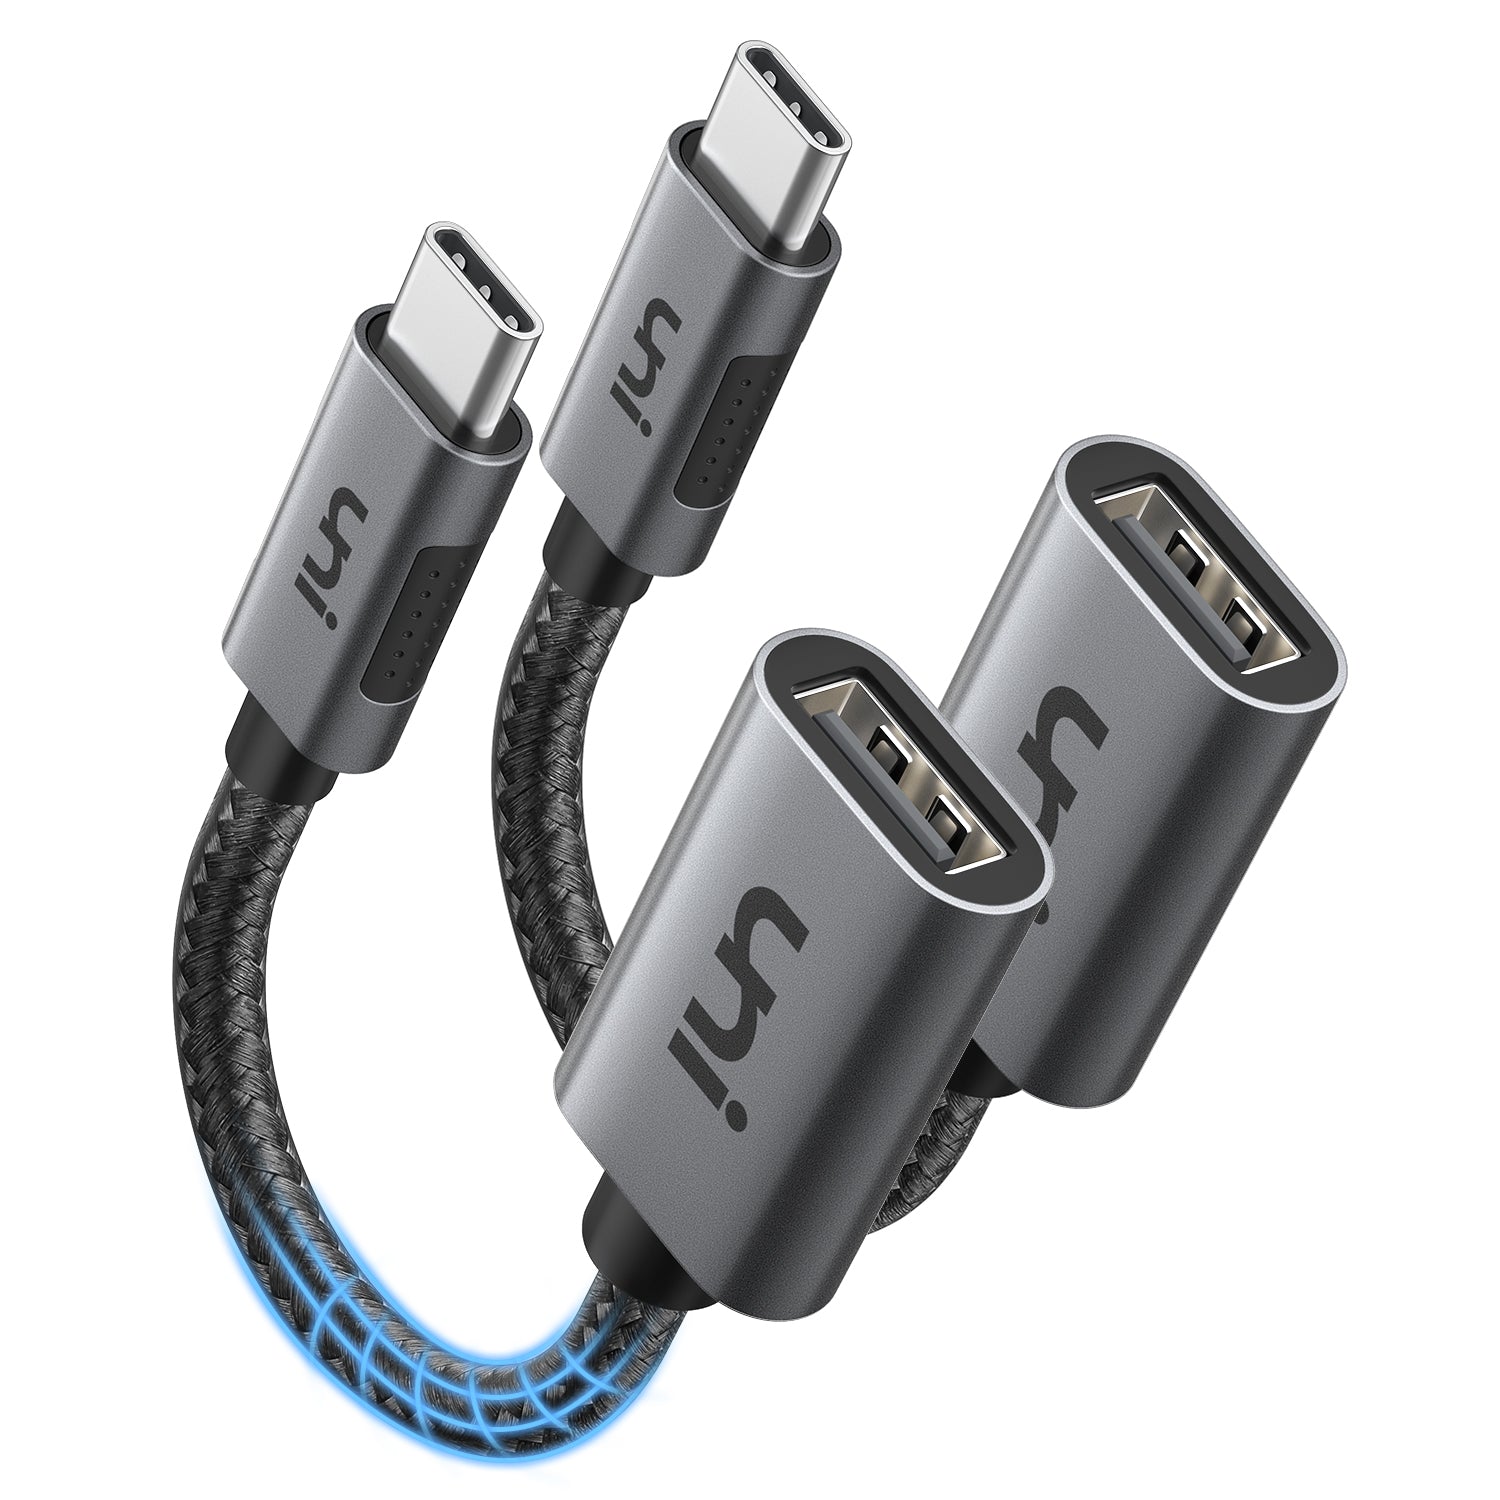 USB-C to USB Adapter | 2 Pack | PLUG